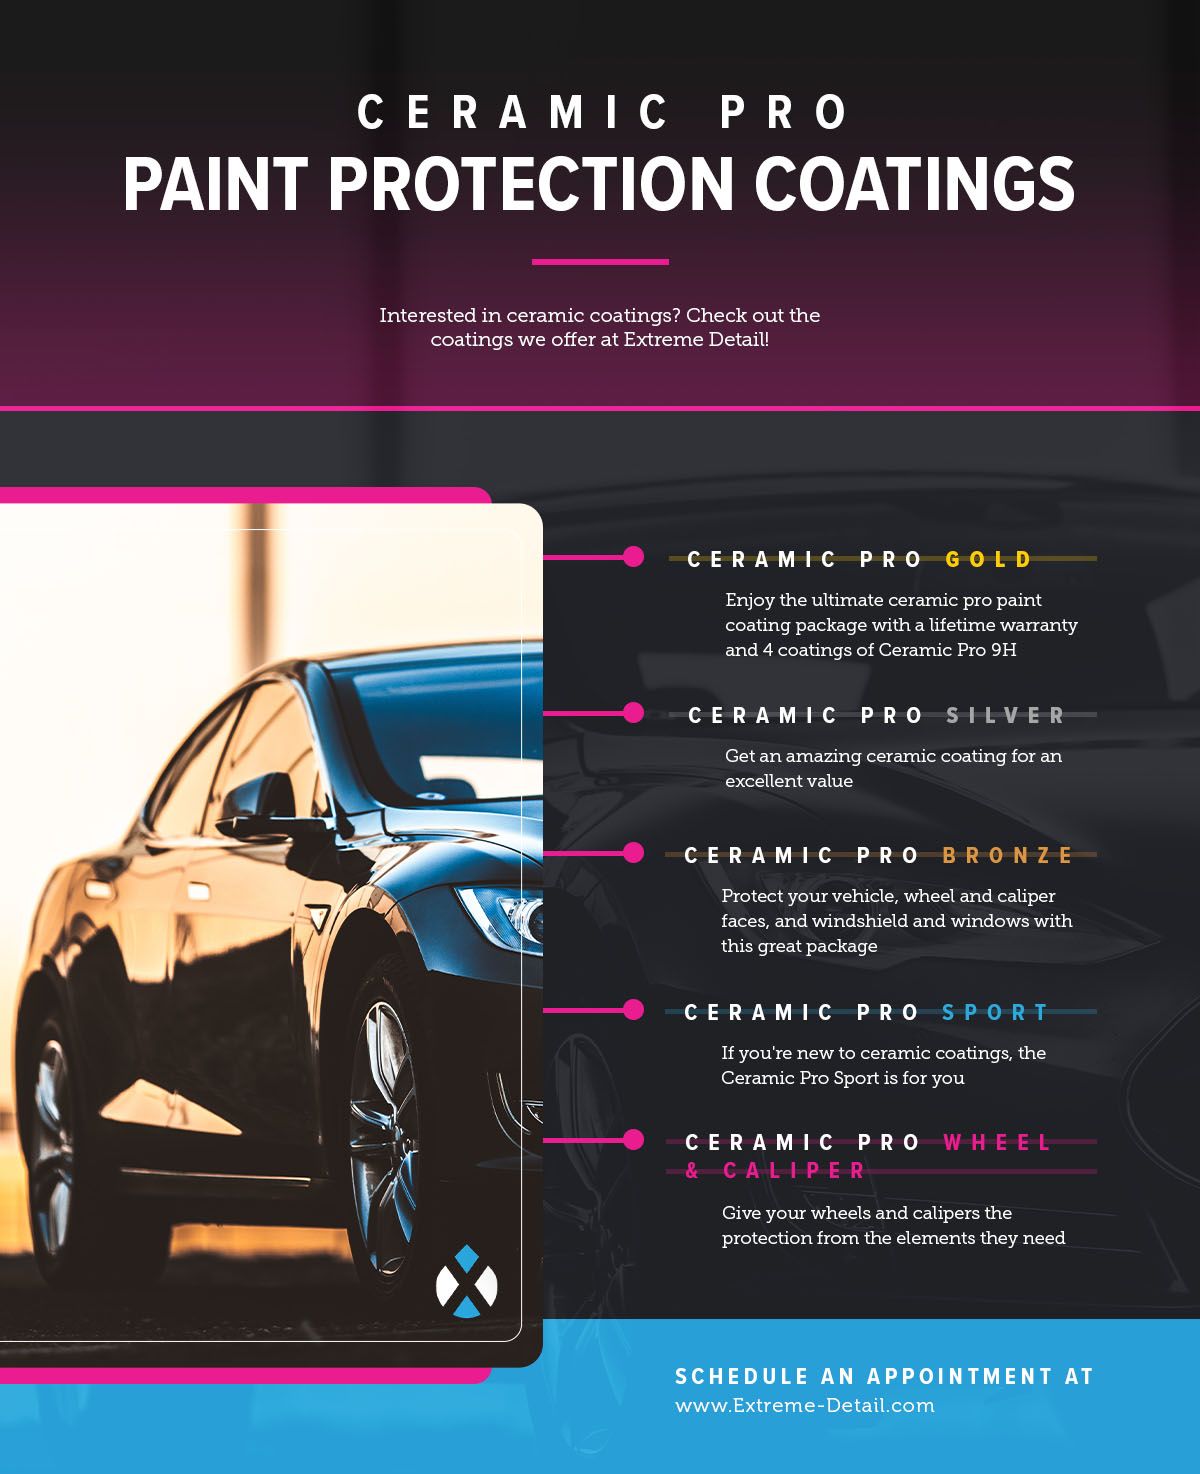 Ceramic Pro Paint Protection Coatings.jpg